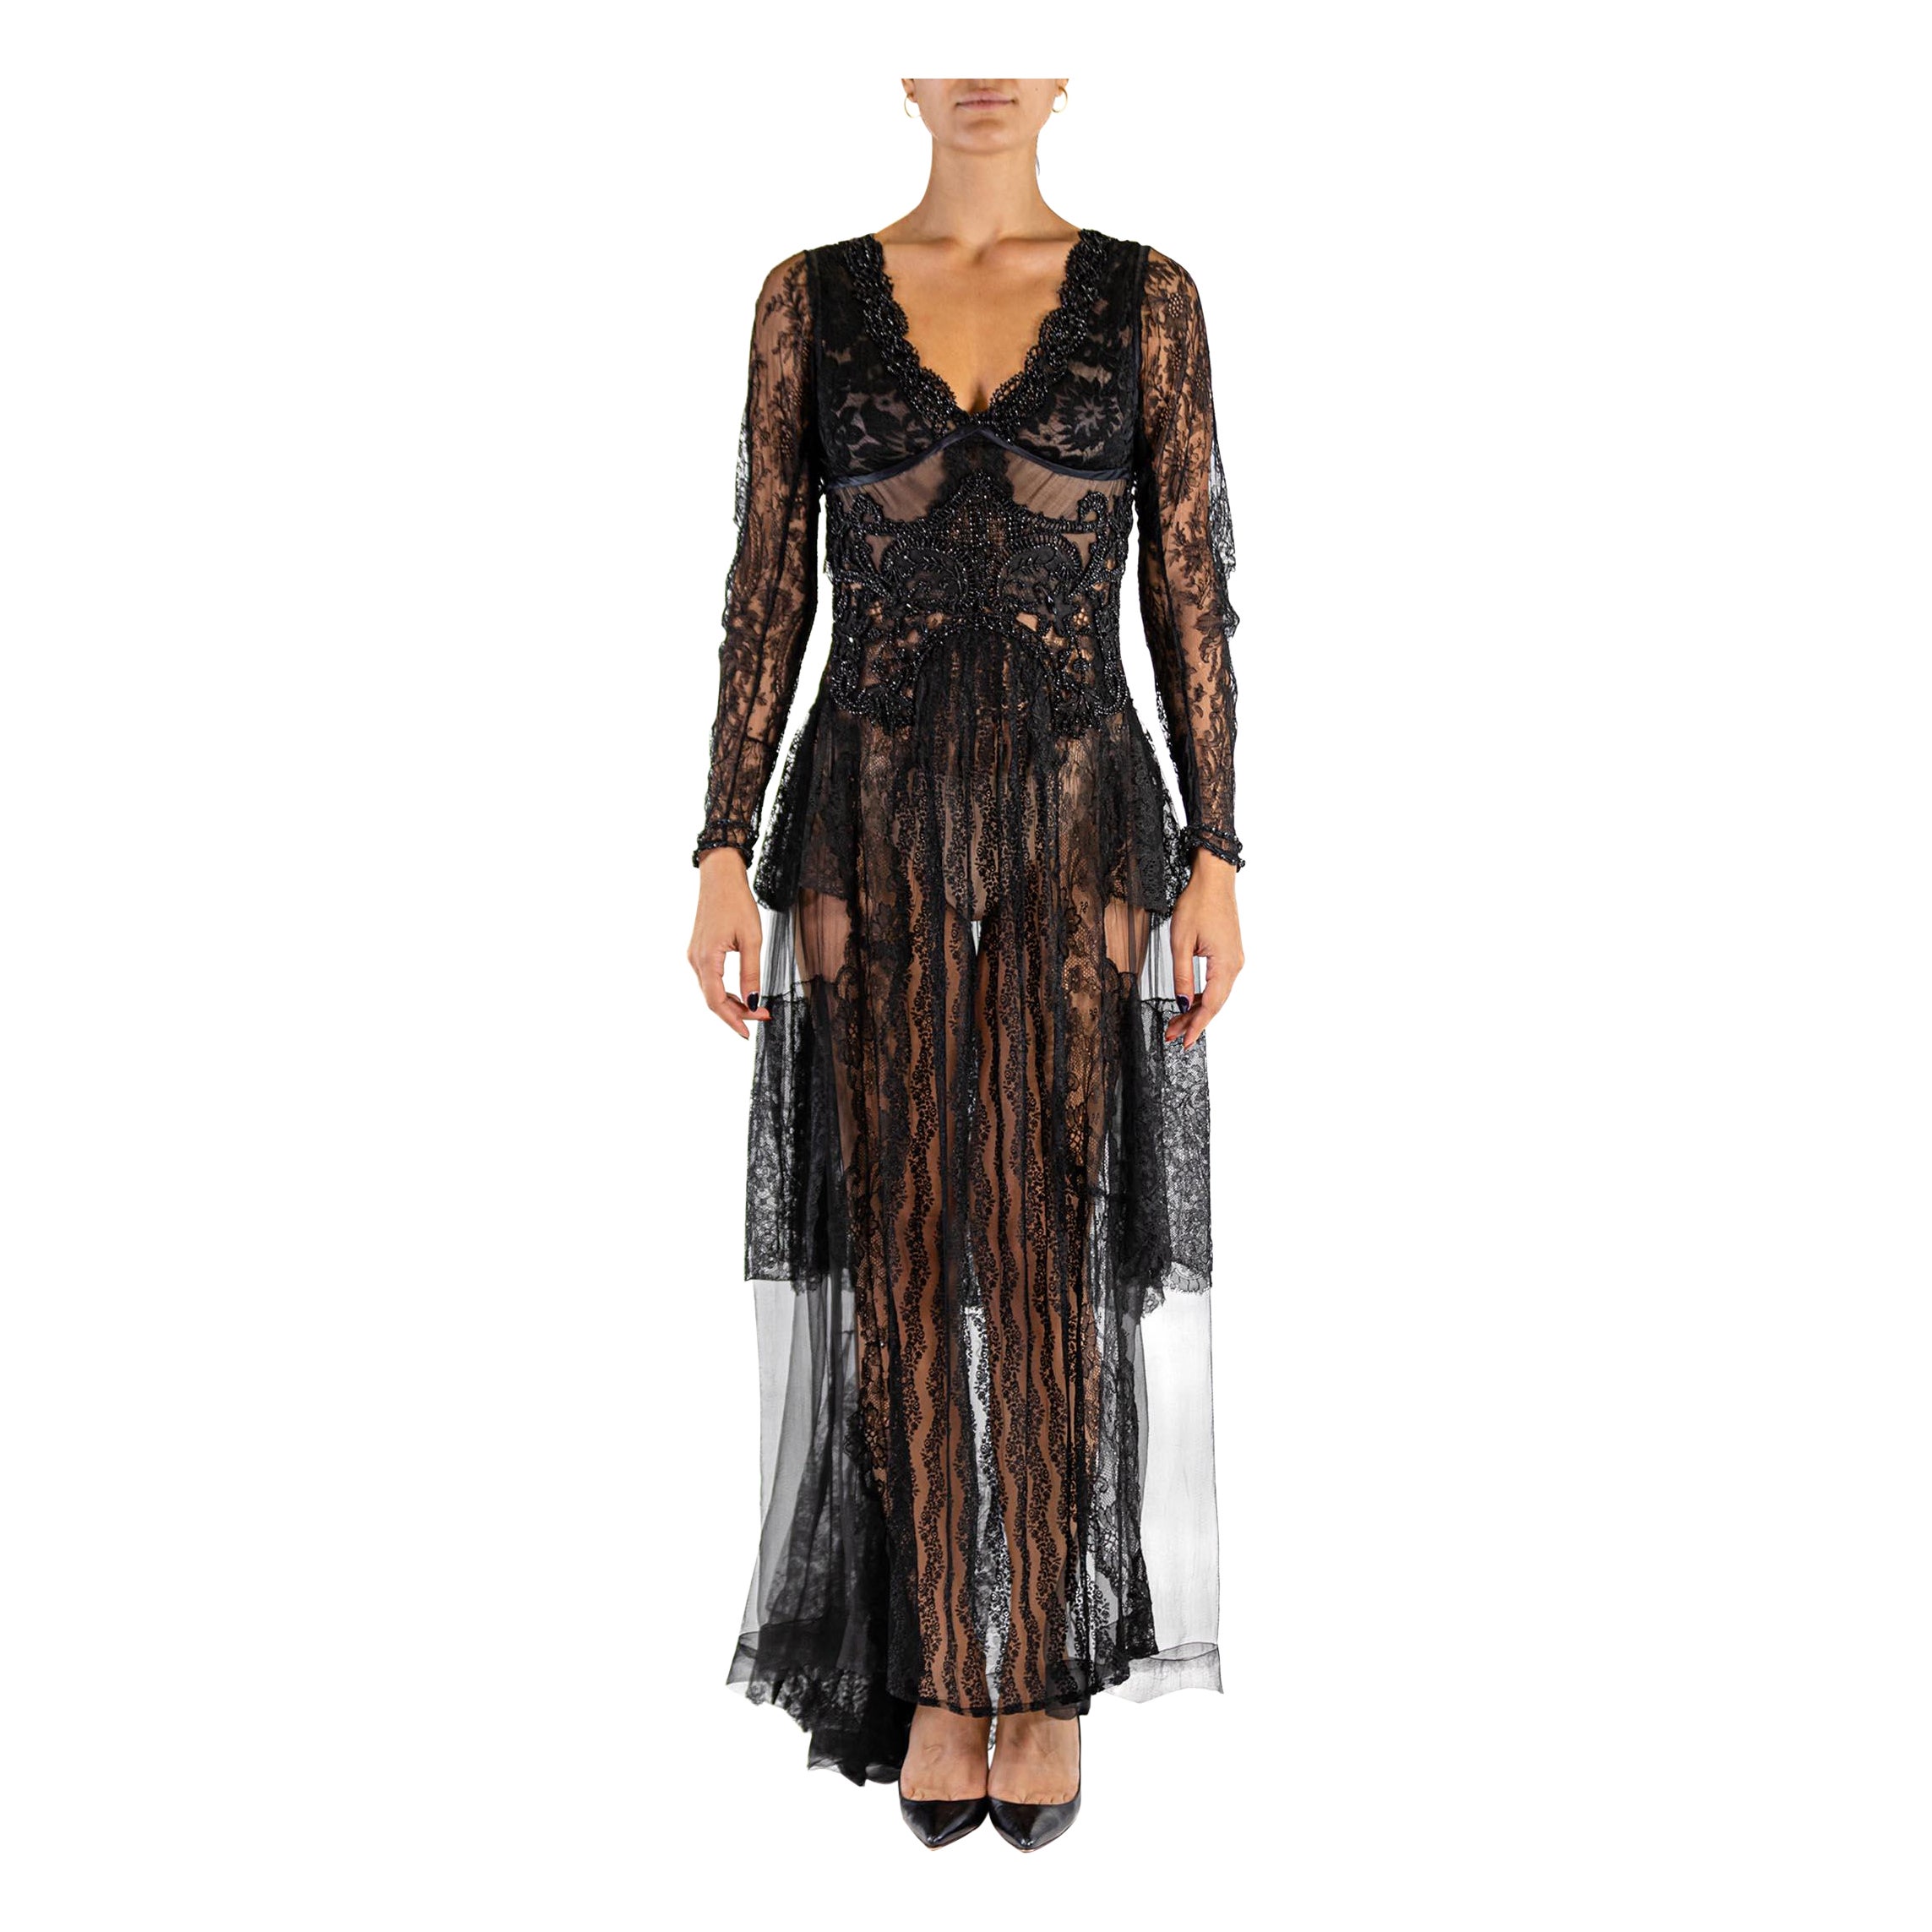 MORPHEW ATELIER Black Antique Lace Victorian Beadwork Gown For Sale